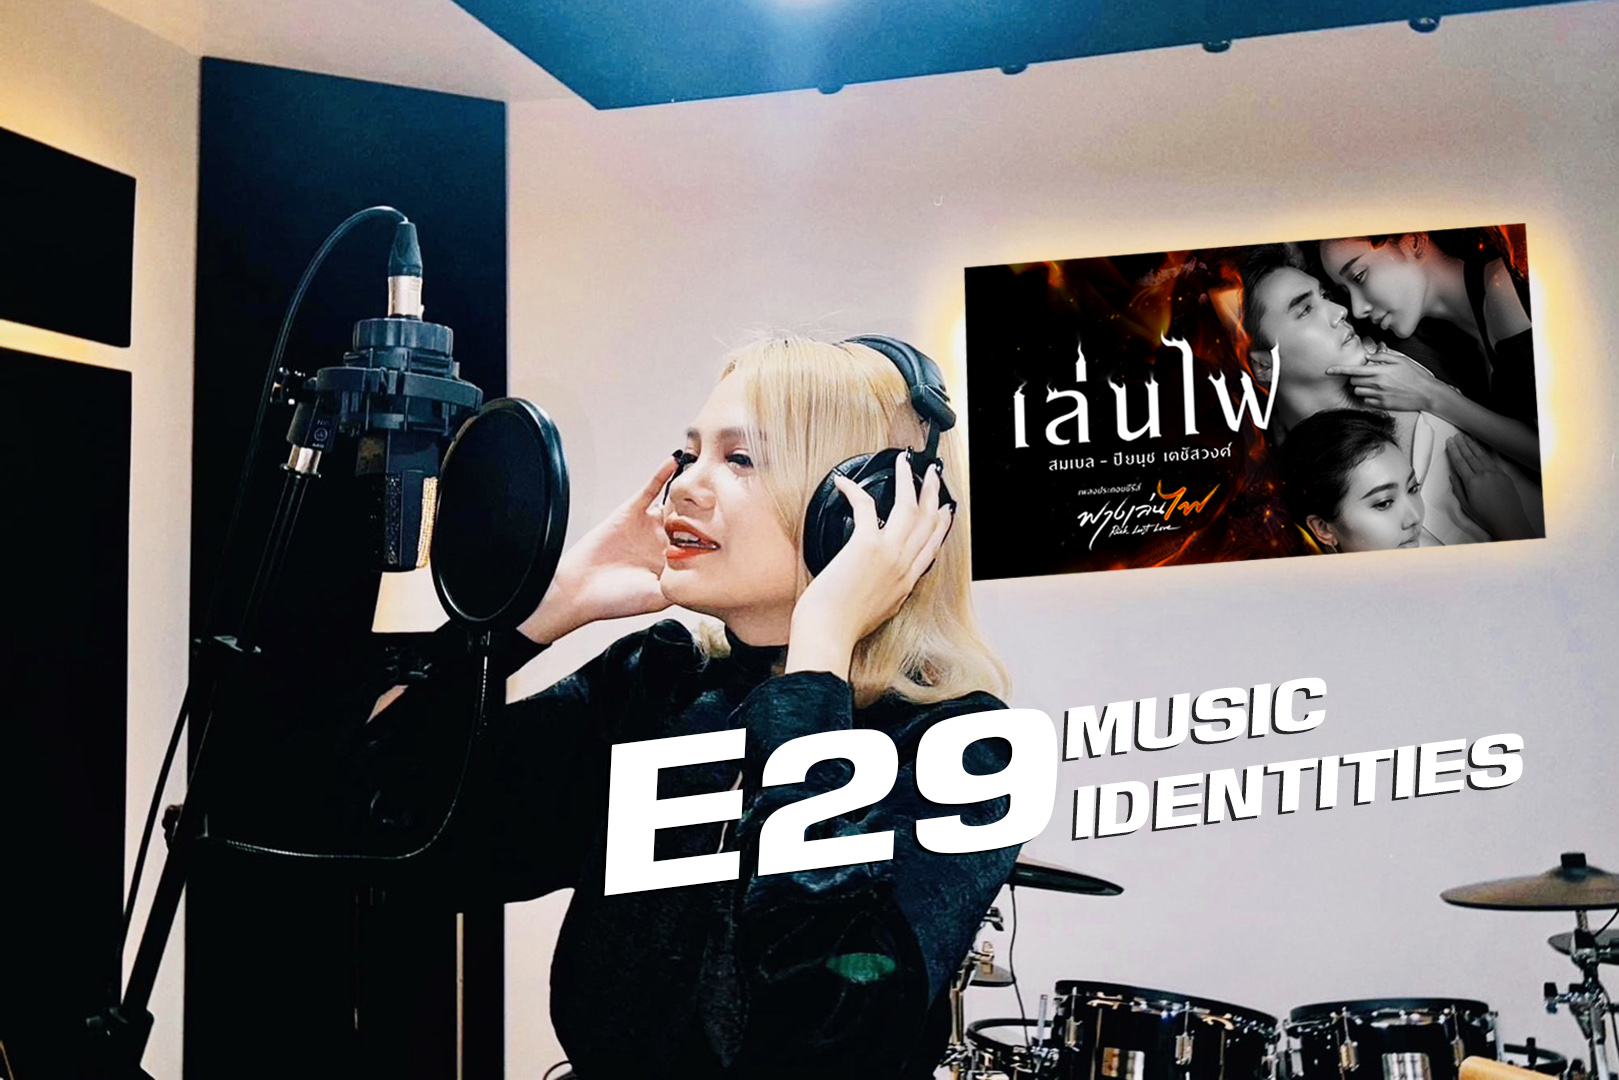 “E29 MUSIC IDENTITIES”